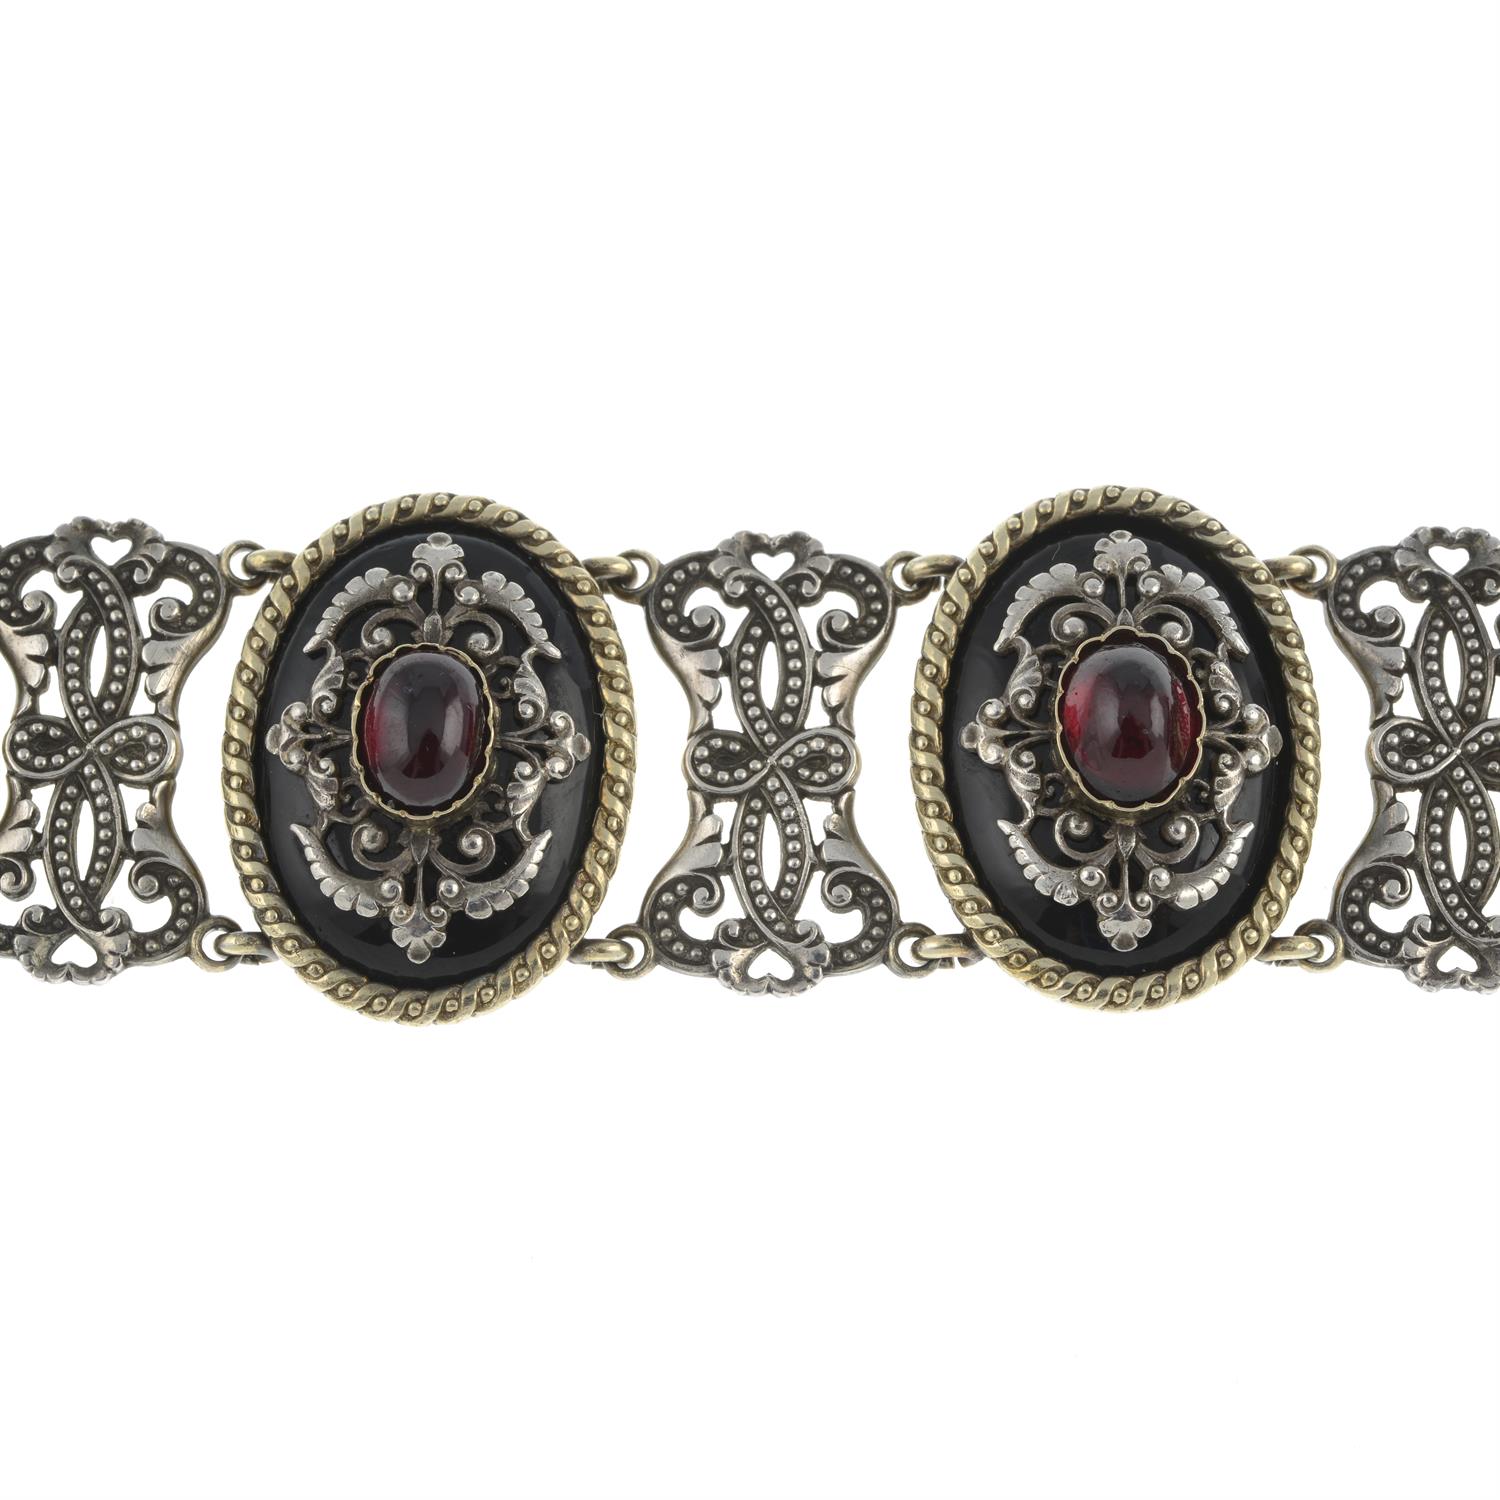 Silver and gold, garnet and enamel bracelet, J. Wiese - Image 3 of 6